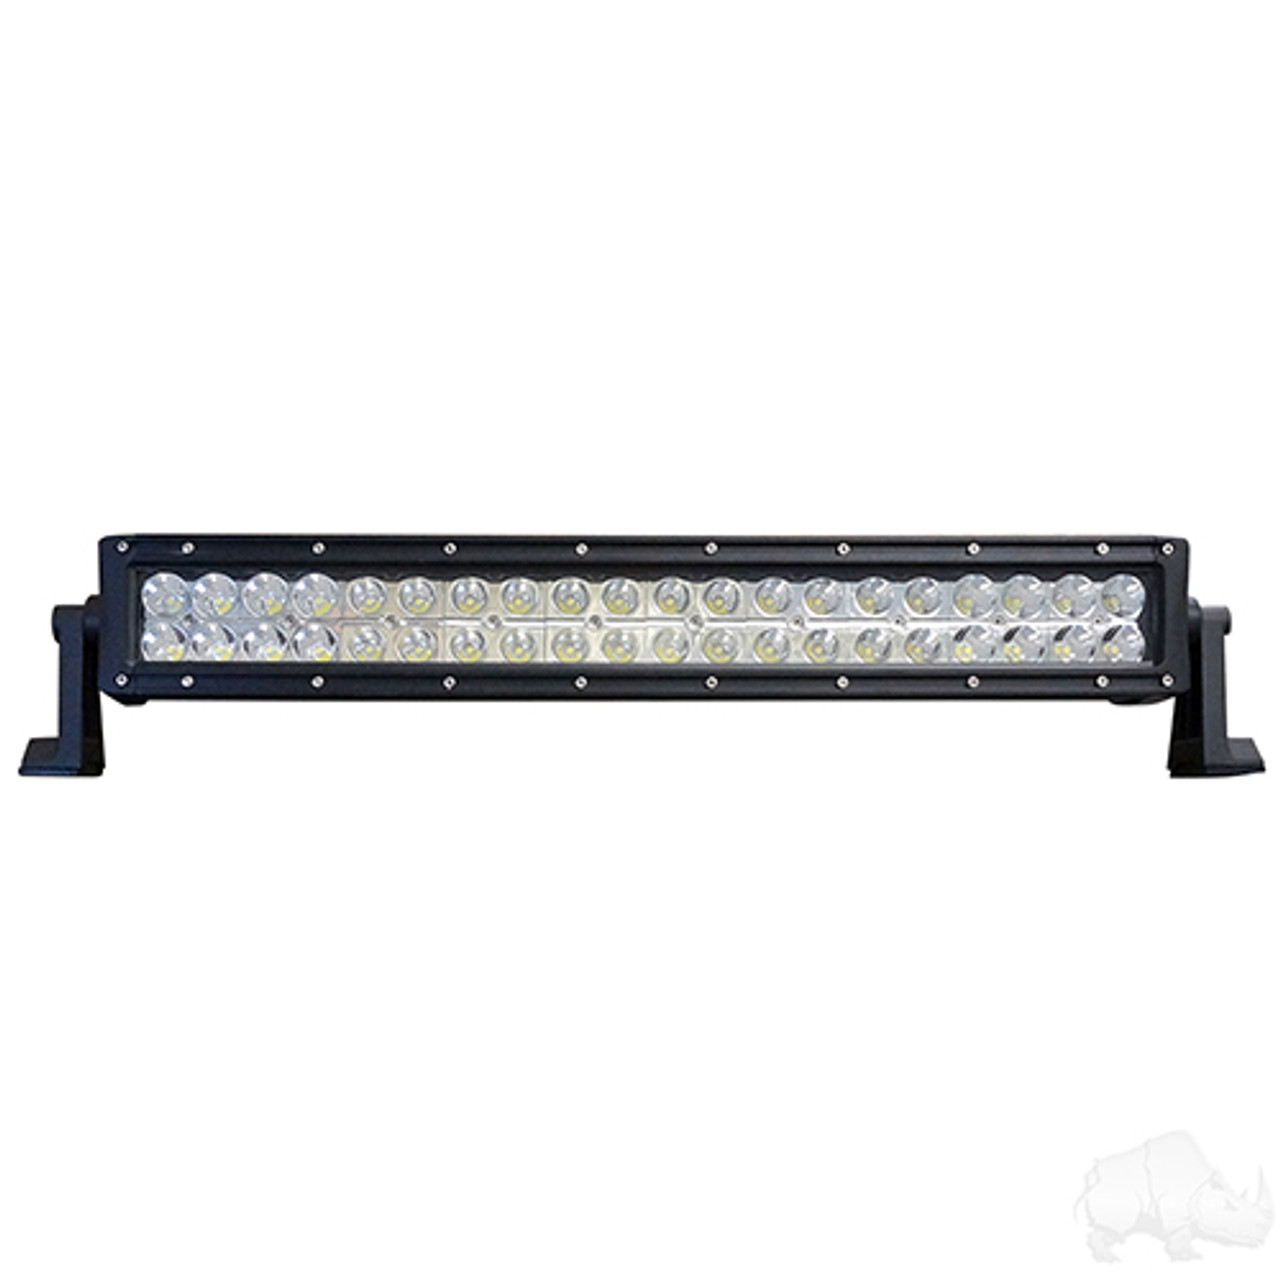 Golf Cart RHOX Light Bar, LED, 21.5", 2012-24V, 120W, 7800 Lumen, LGT-721L